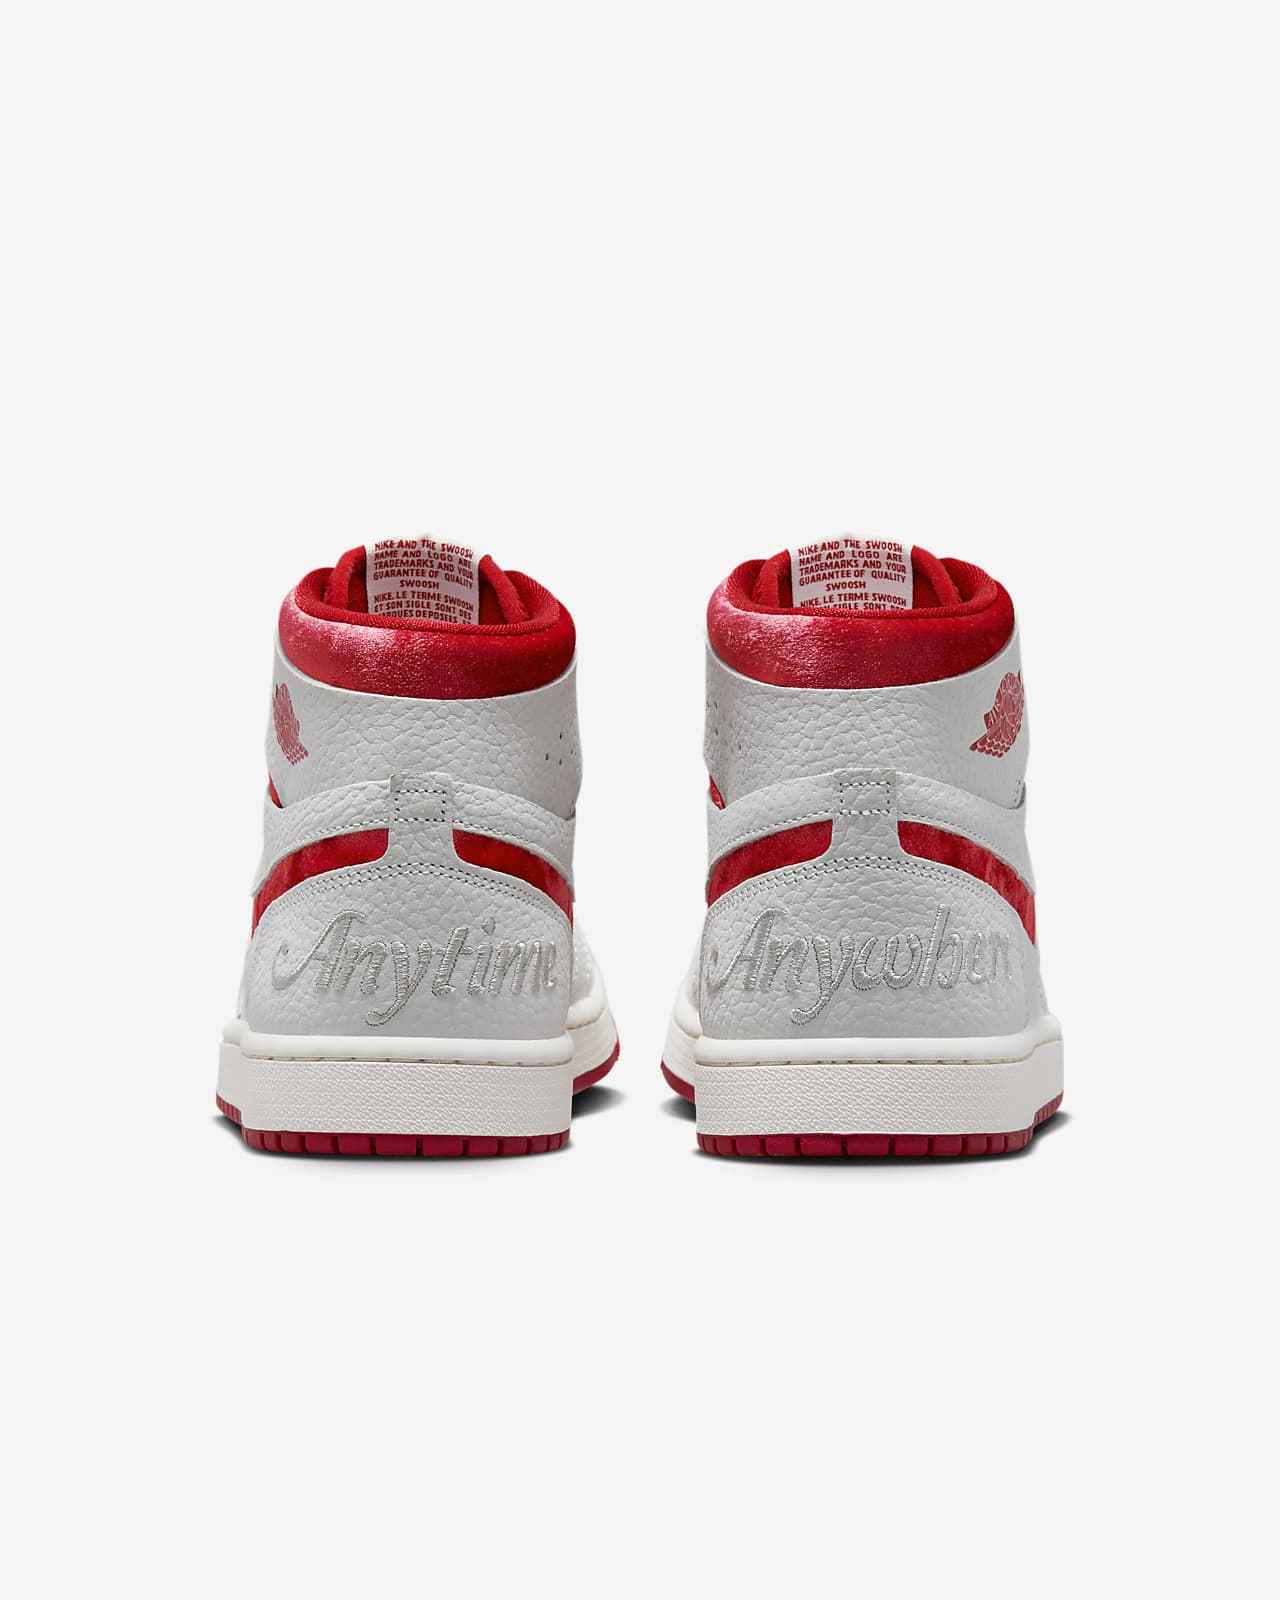 vervaldatum Verdeel Stier Air Jordan 1 Zoom CMFT 2 "Valentines Day" Women's Shoes. Nike.com